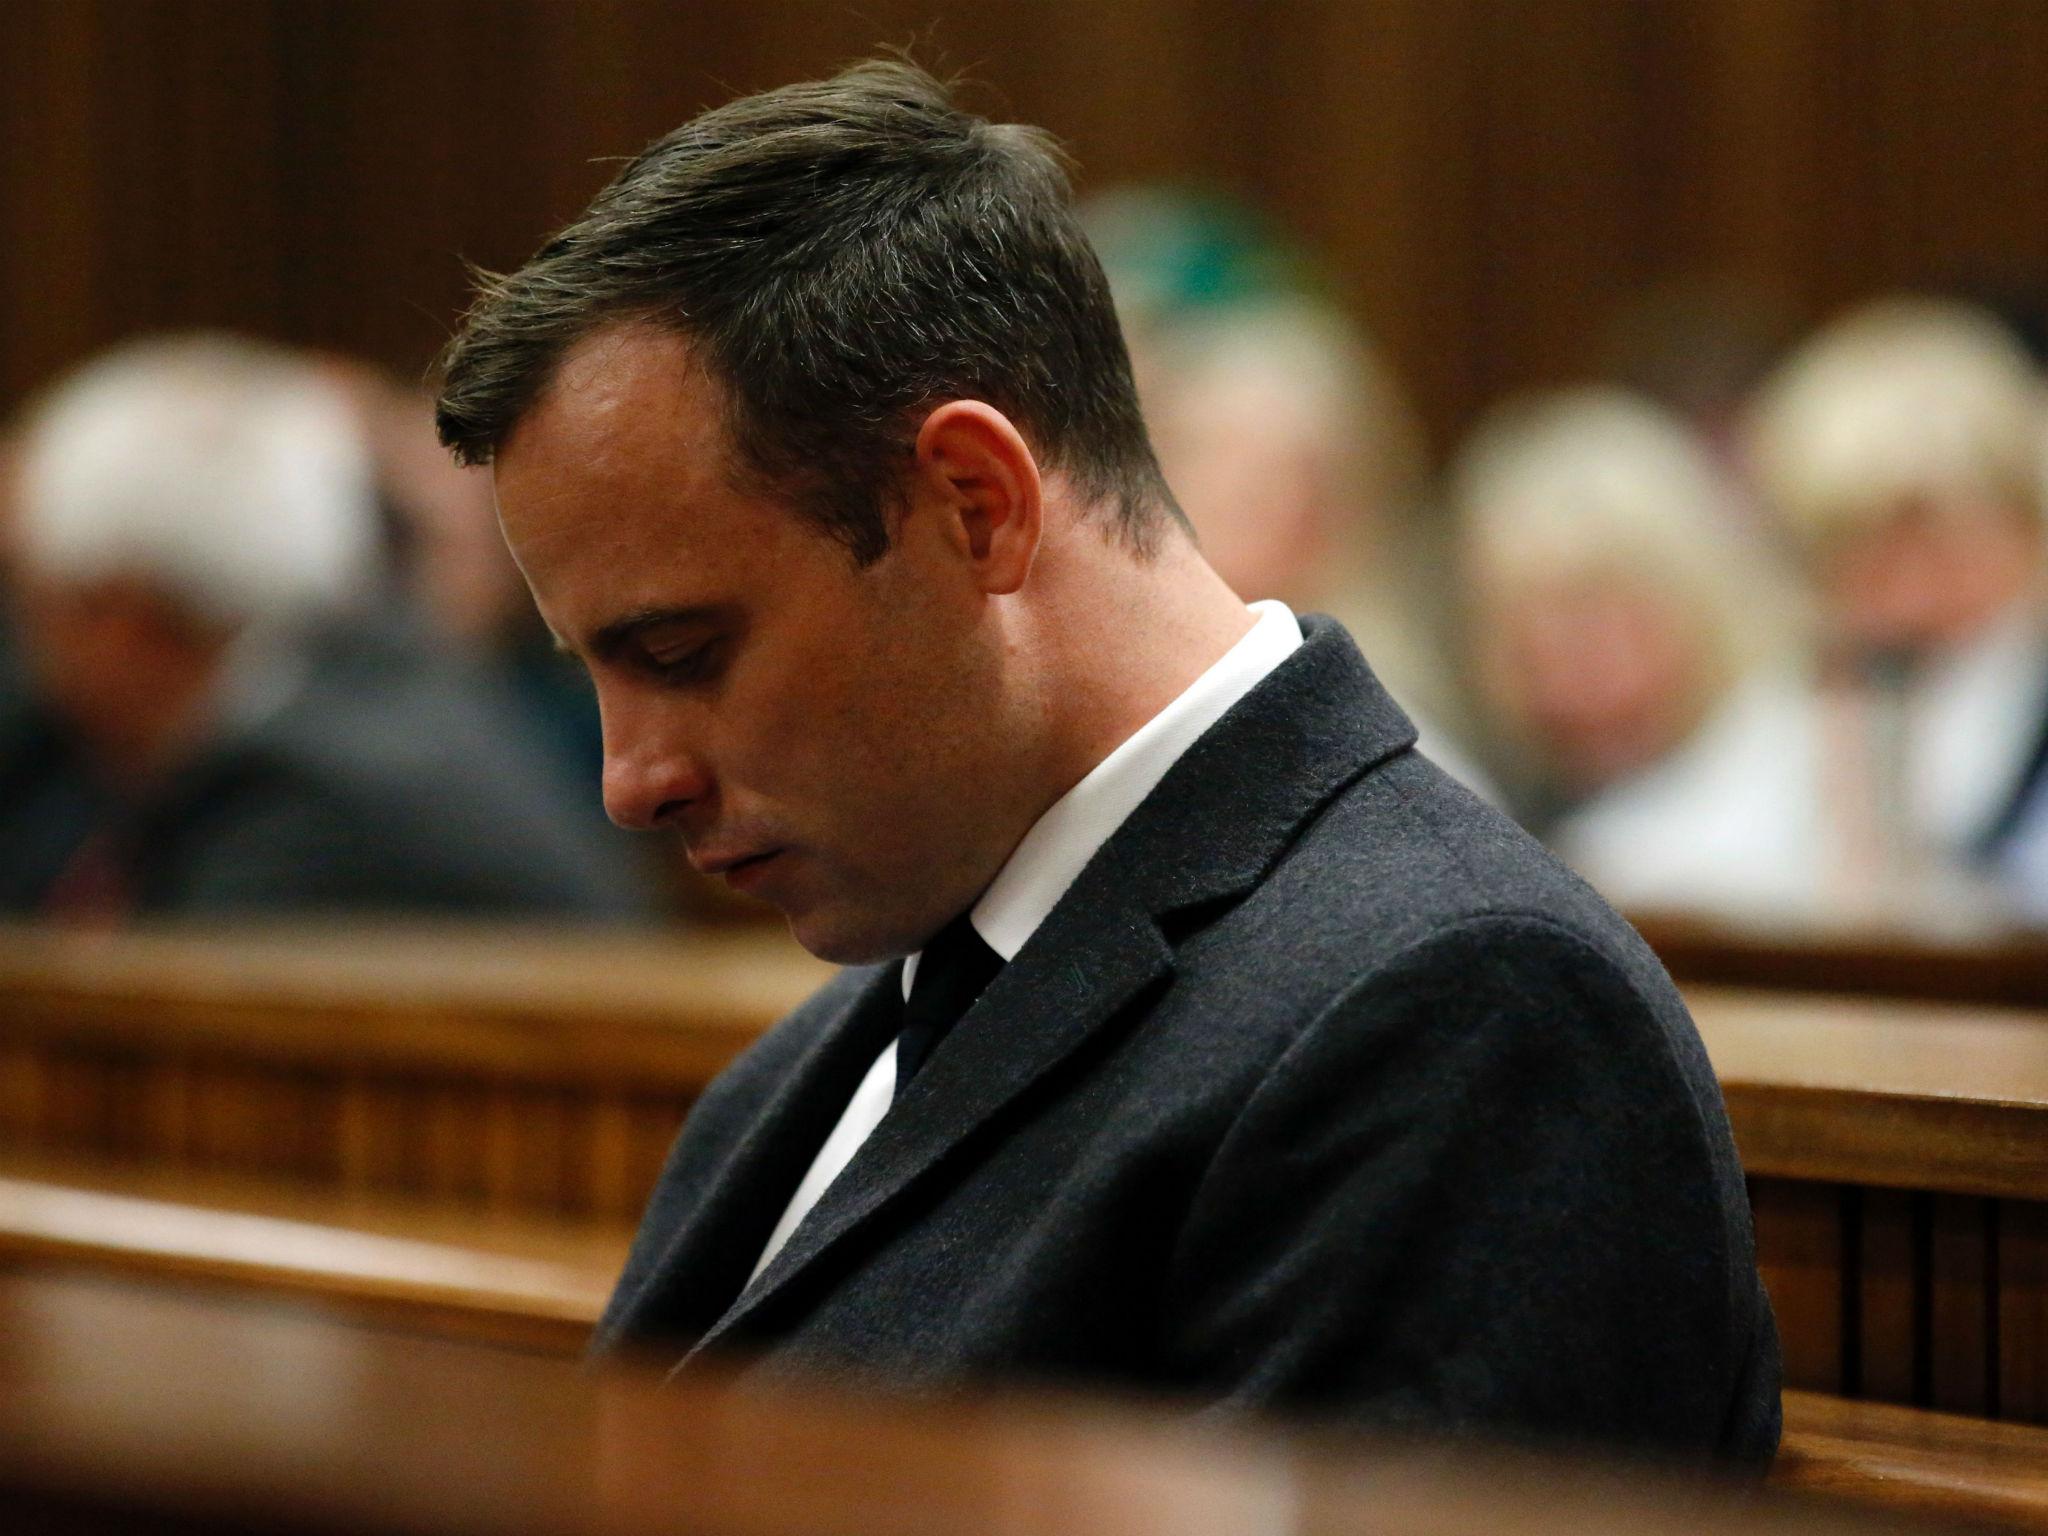 Oscar Pistorius listens to Judge Masipa's ruling in court